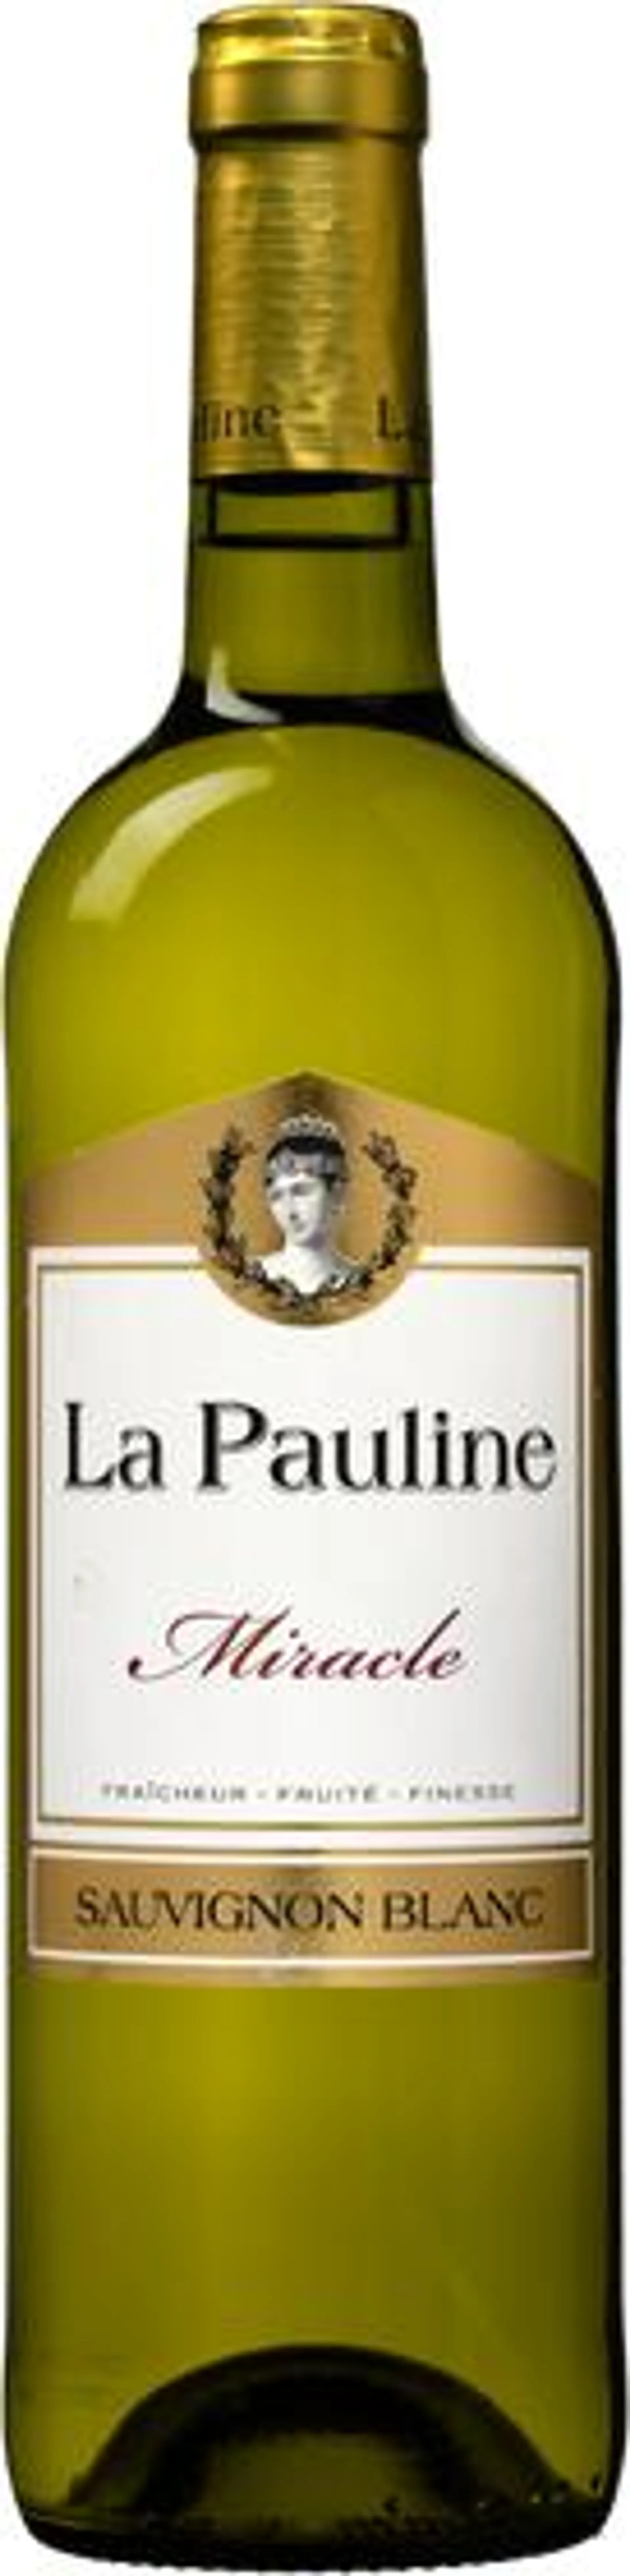 La Pauline 'Miracle' Sauvignon Blanc